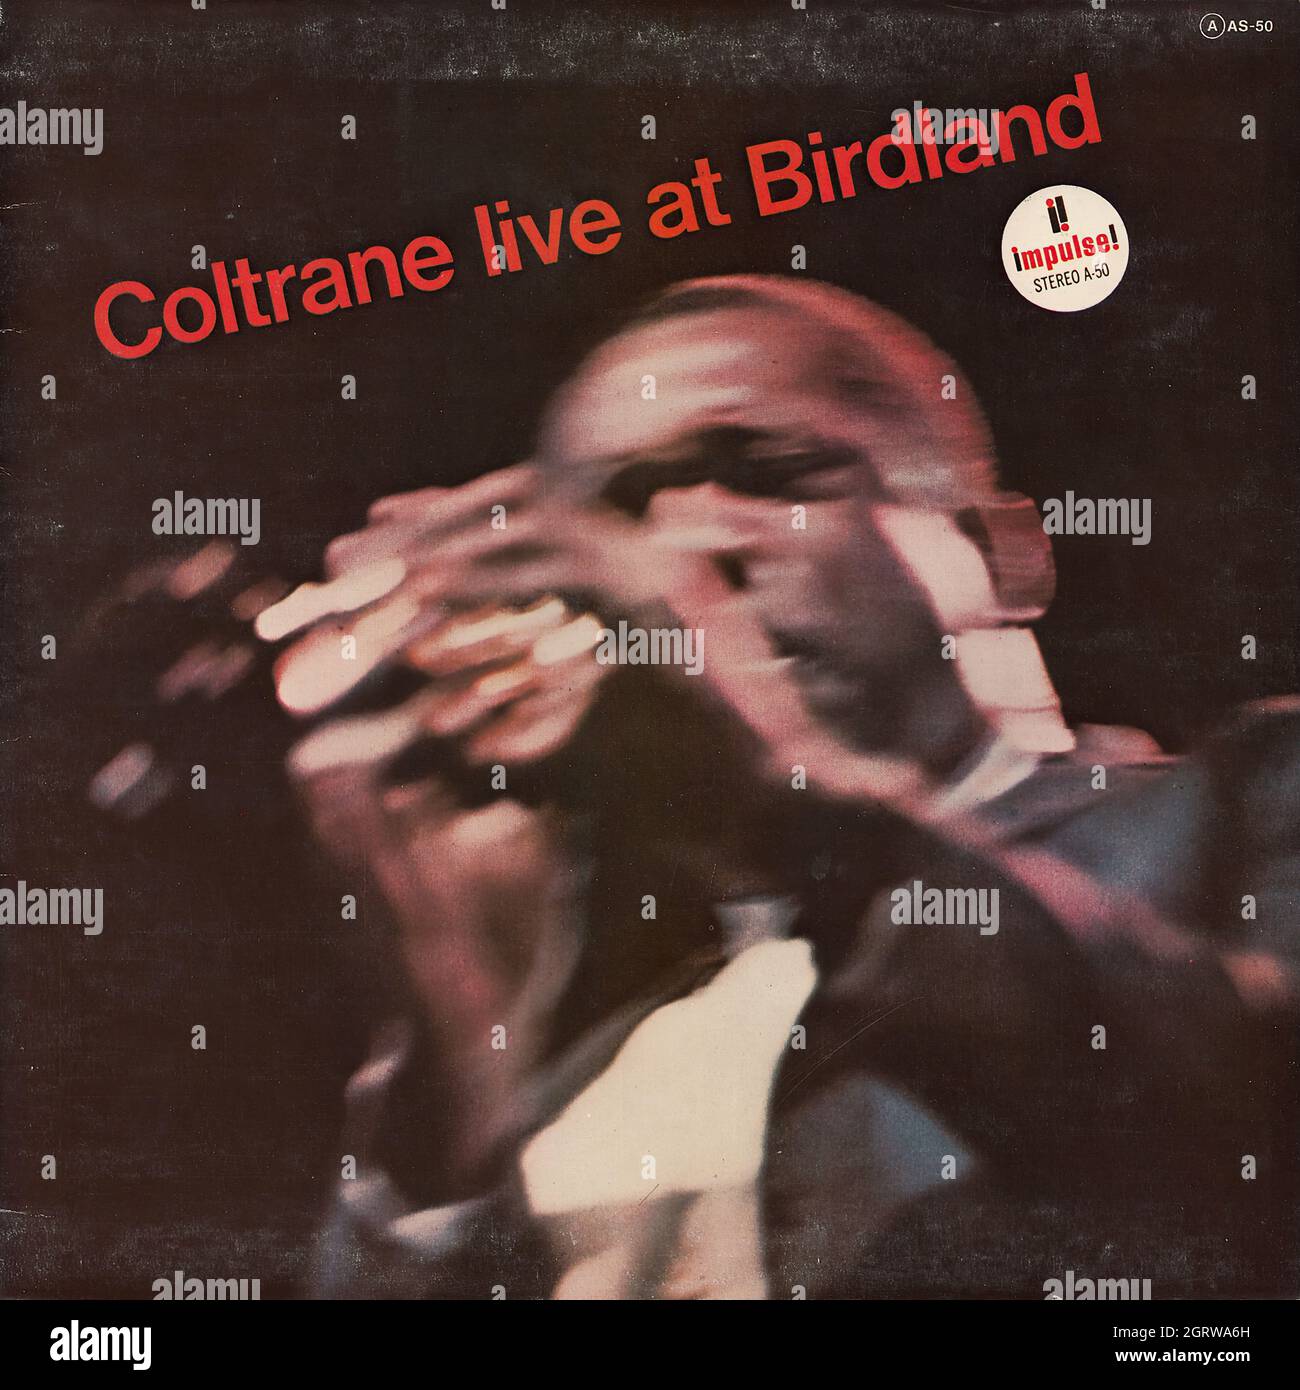 John Coltrane - Coltrane live at Birdland - Vintage Vinyl Record Cover Stock Photo